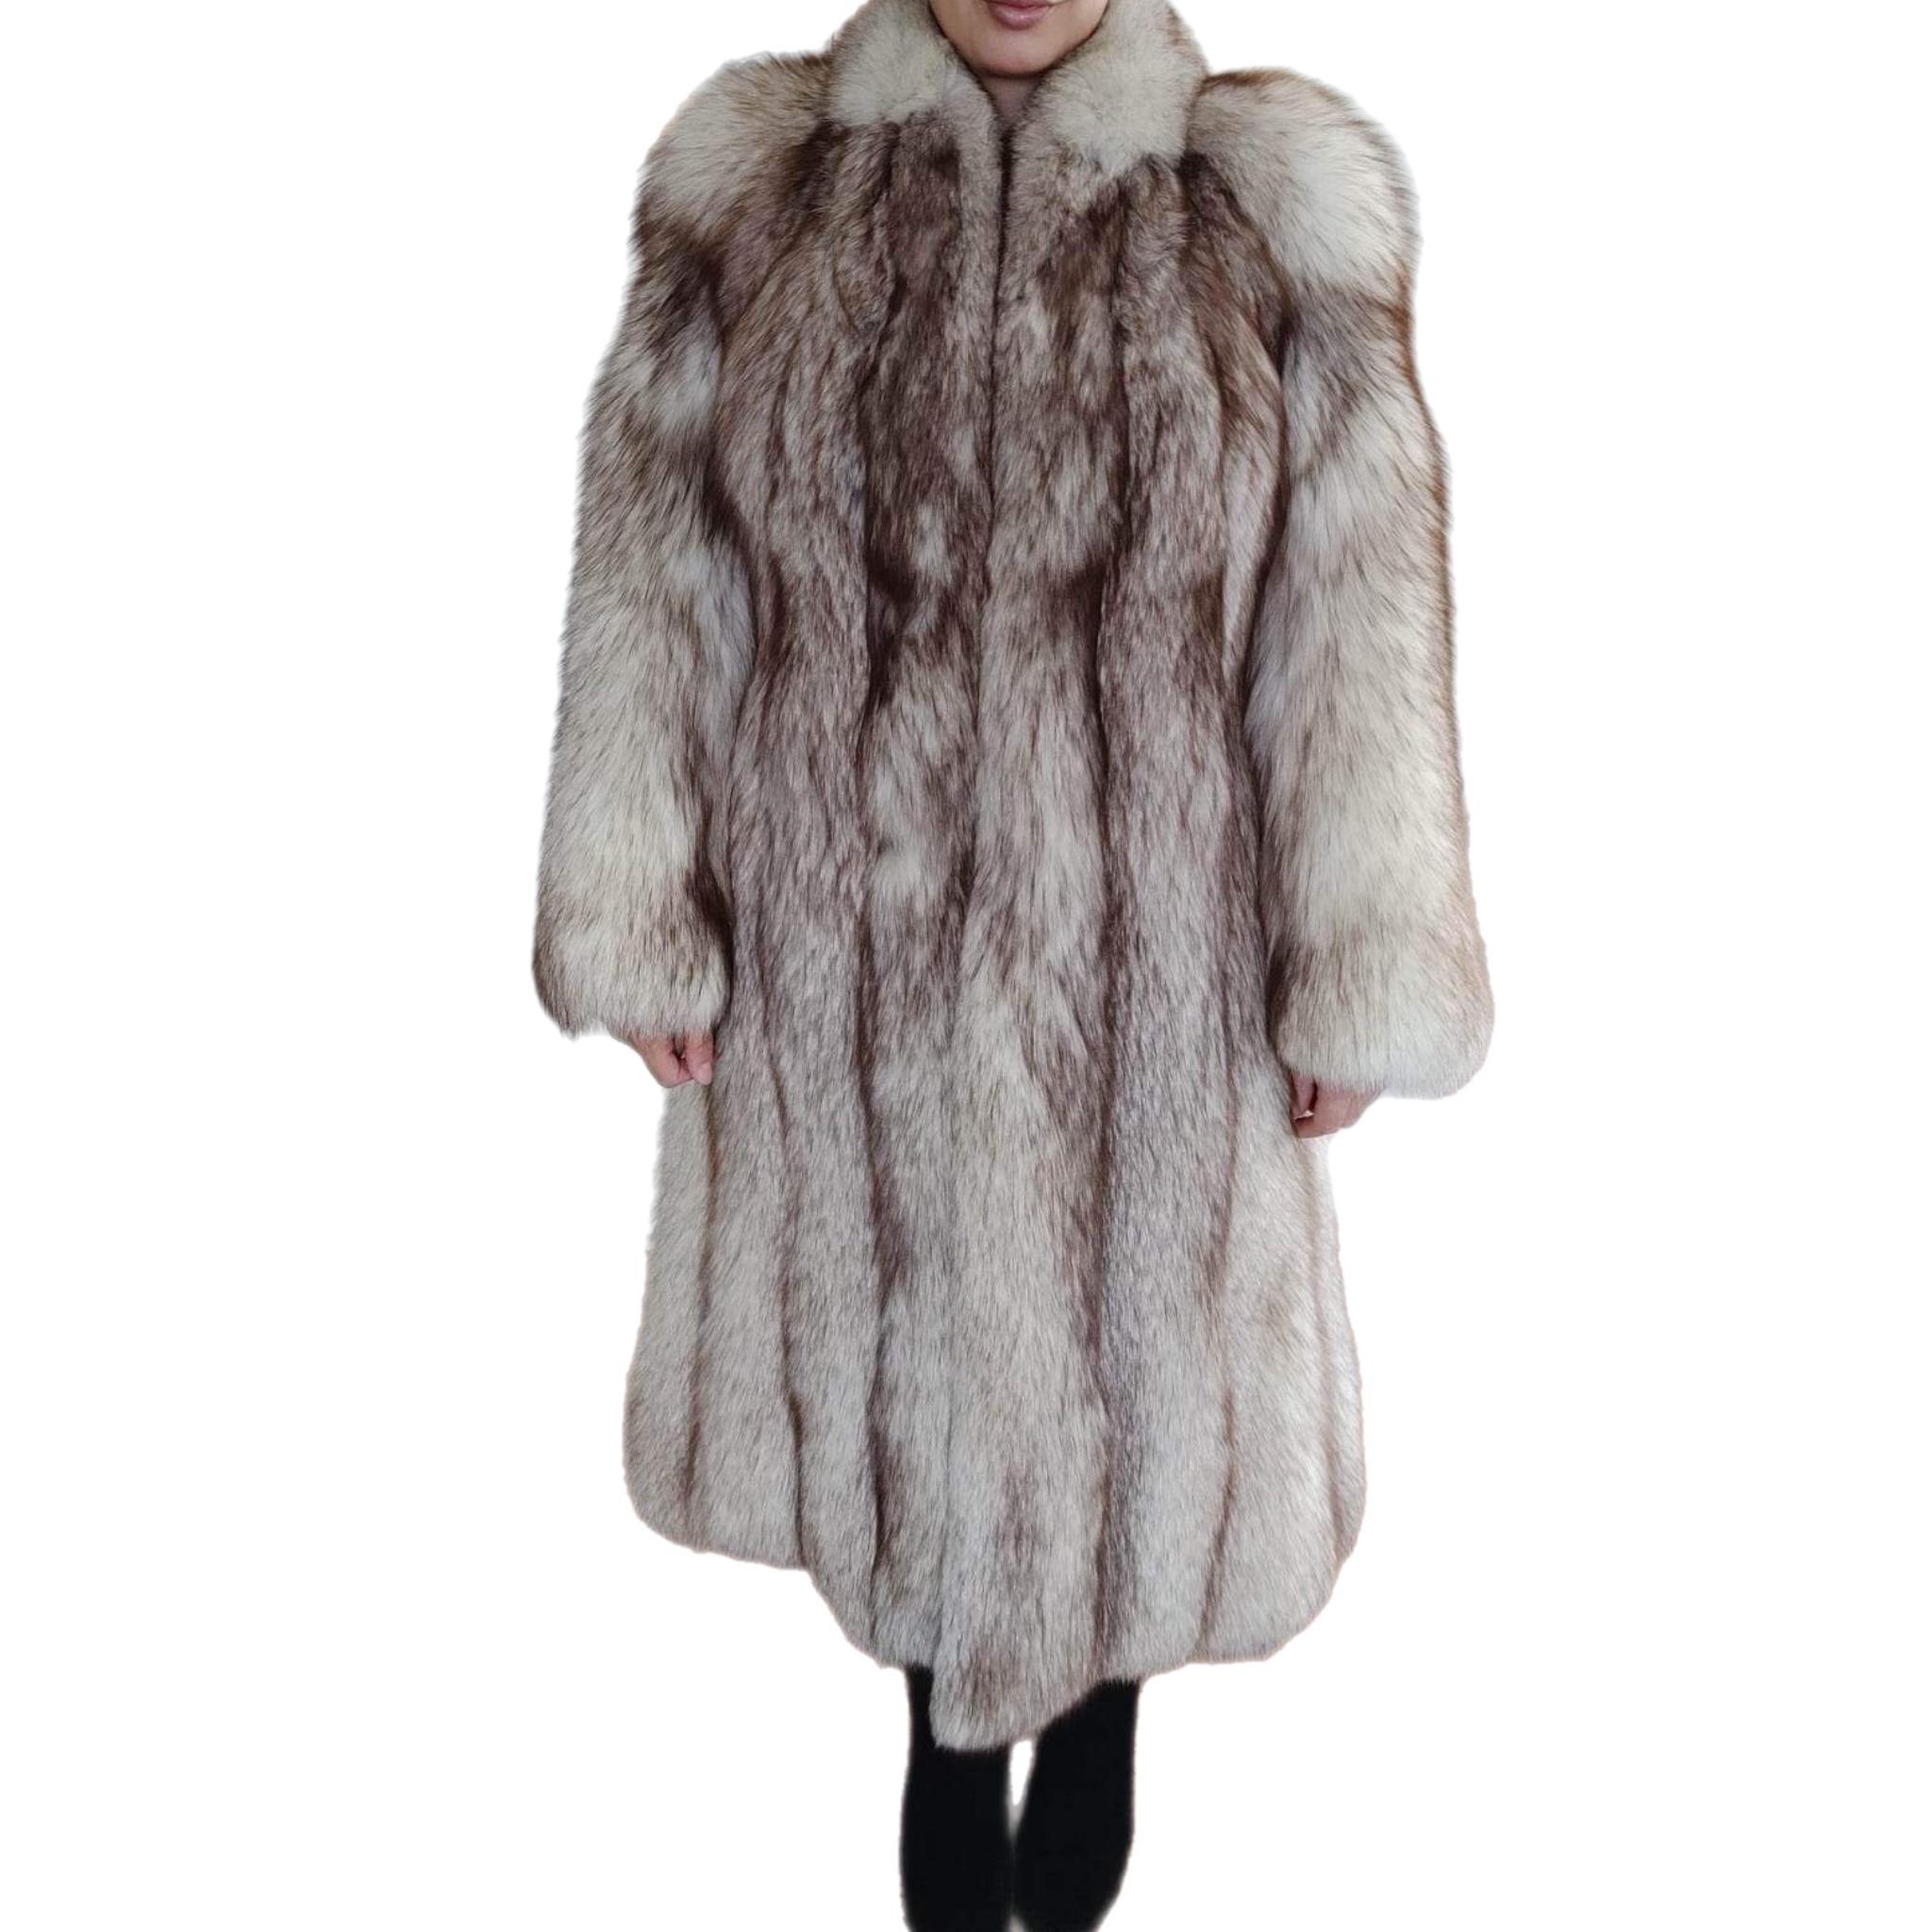 Norwegian Fox Fur coat (Size 8 -S)

Measurements:
-Size 8
-Length 37